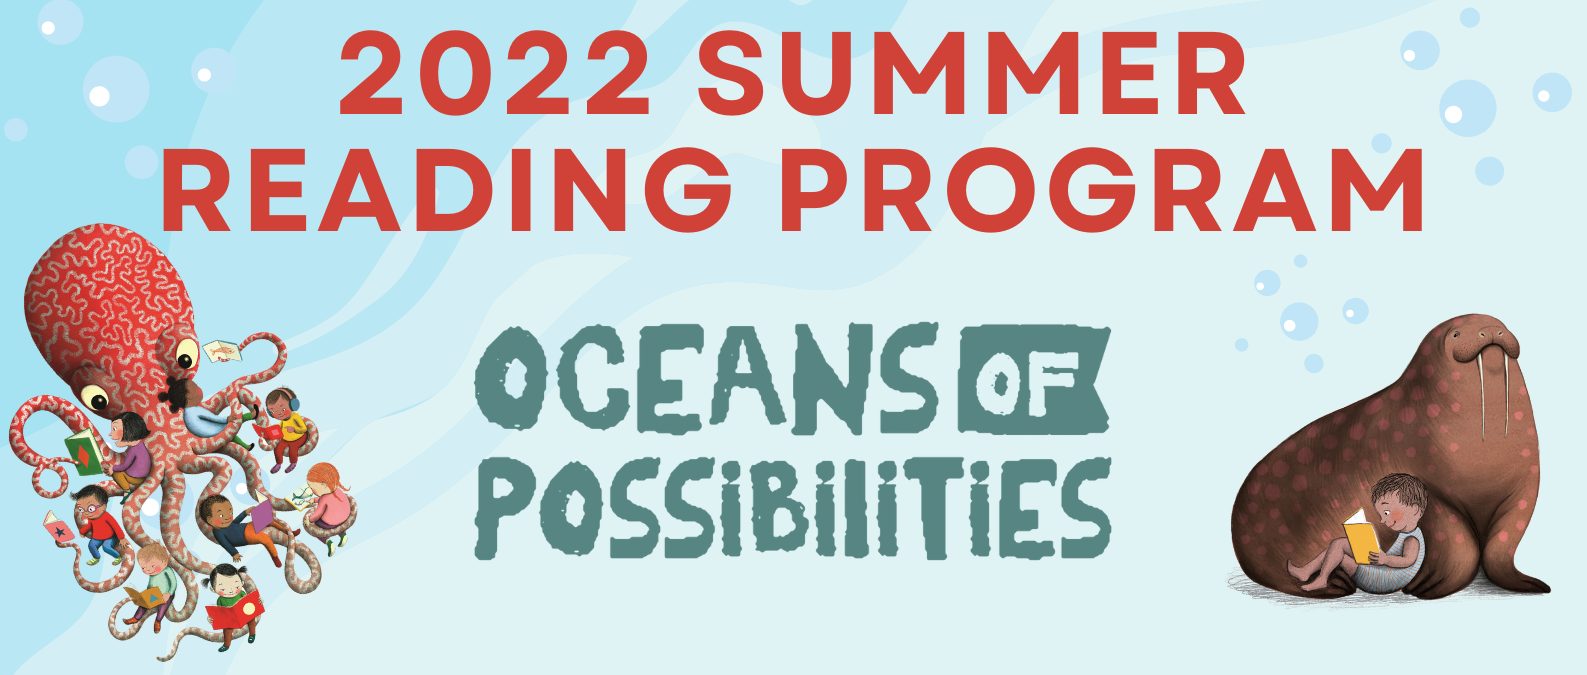 2022 summer reading program: oceans of possibilities